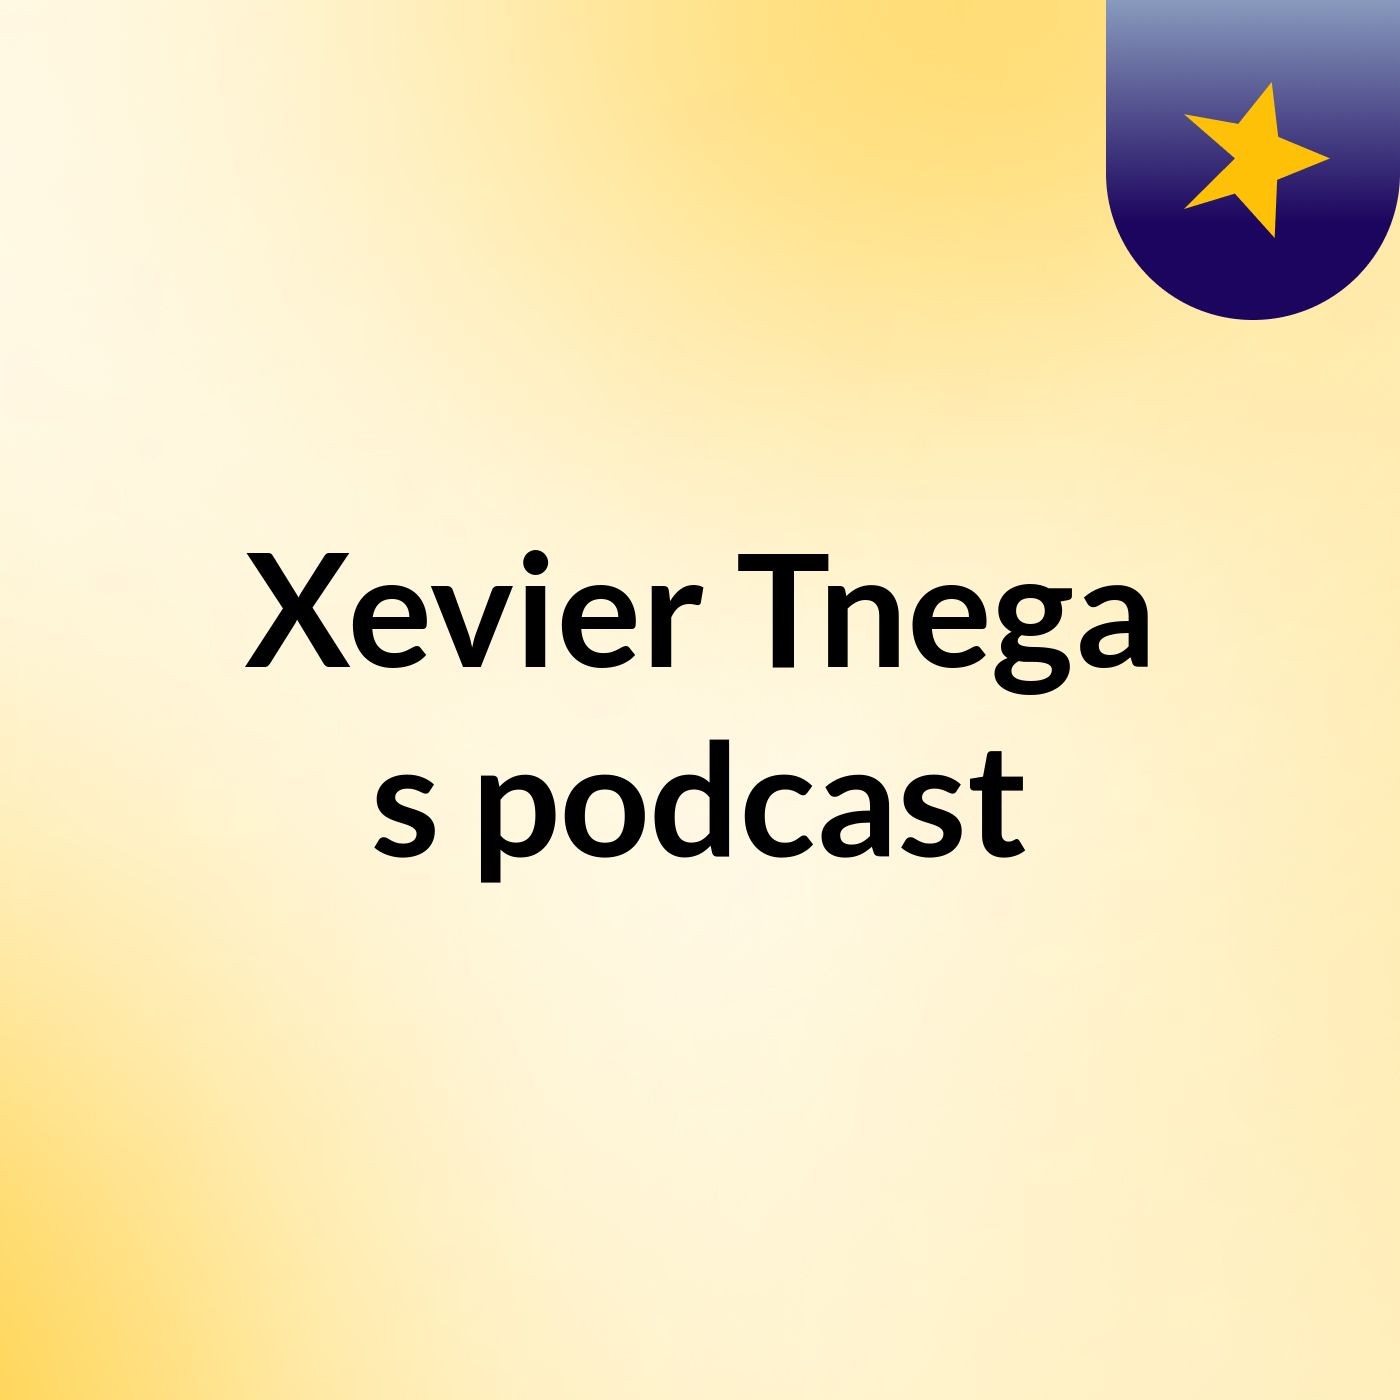 Episode 4 - Xevier Tnega's podcast